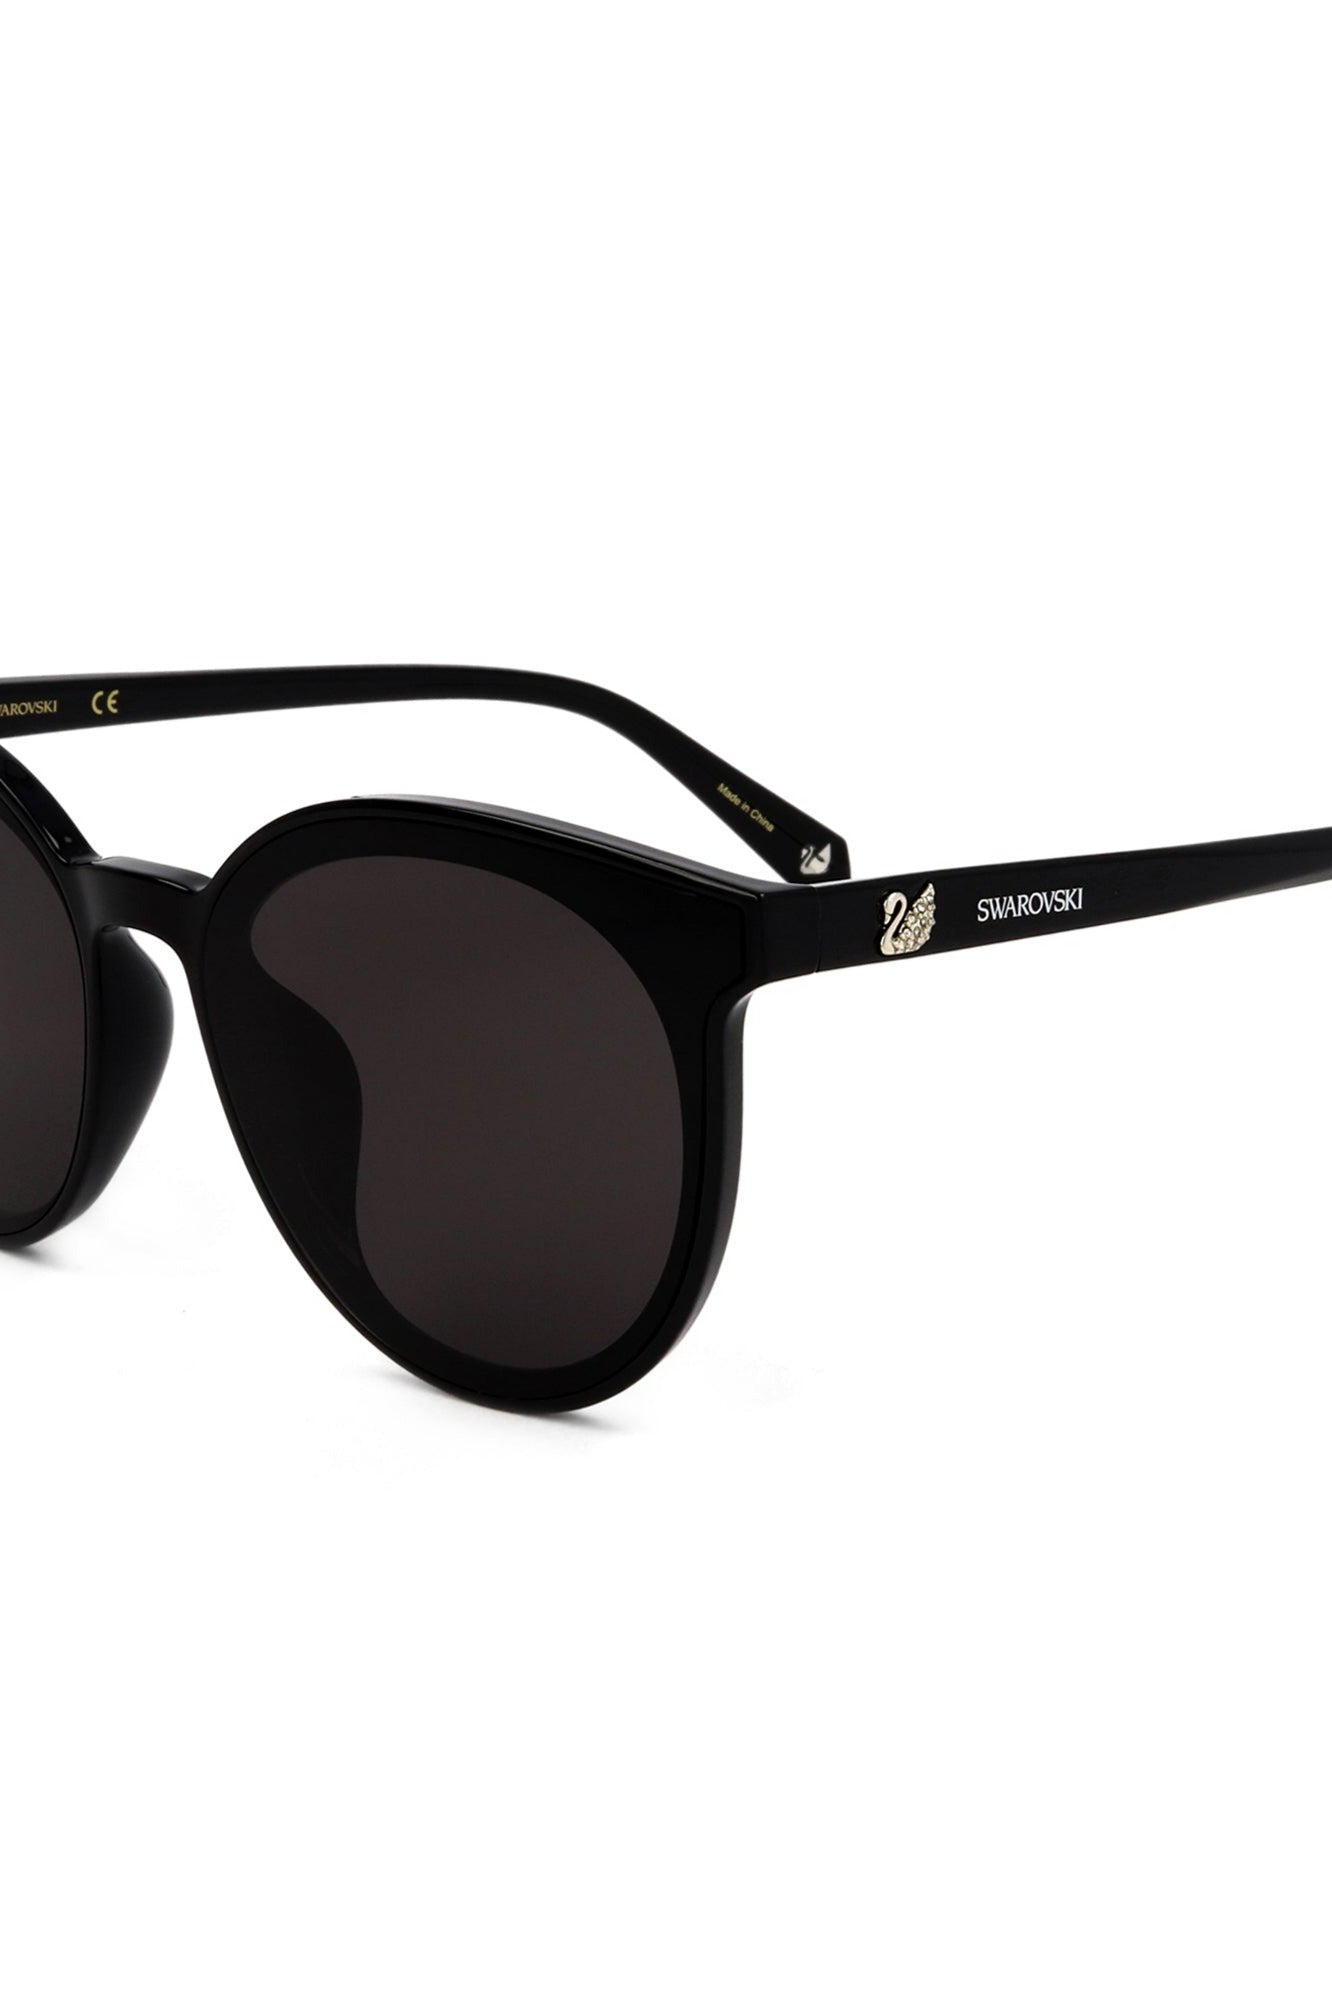 Swarovski - Oversized Black Sunglasses - Swarovski - [product type] - Magpie Style